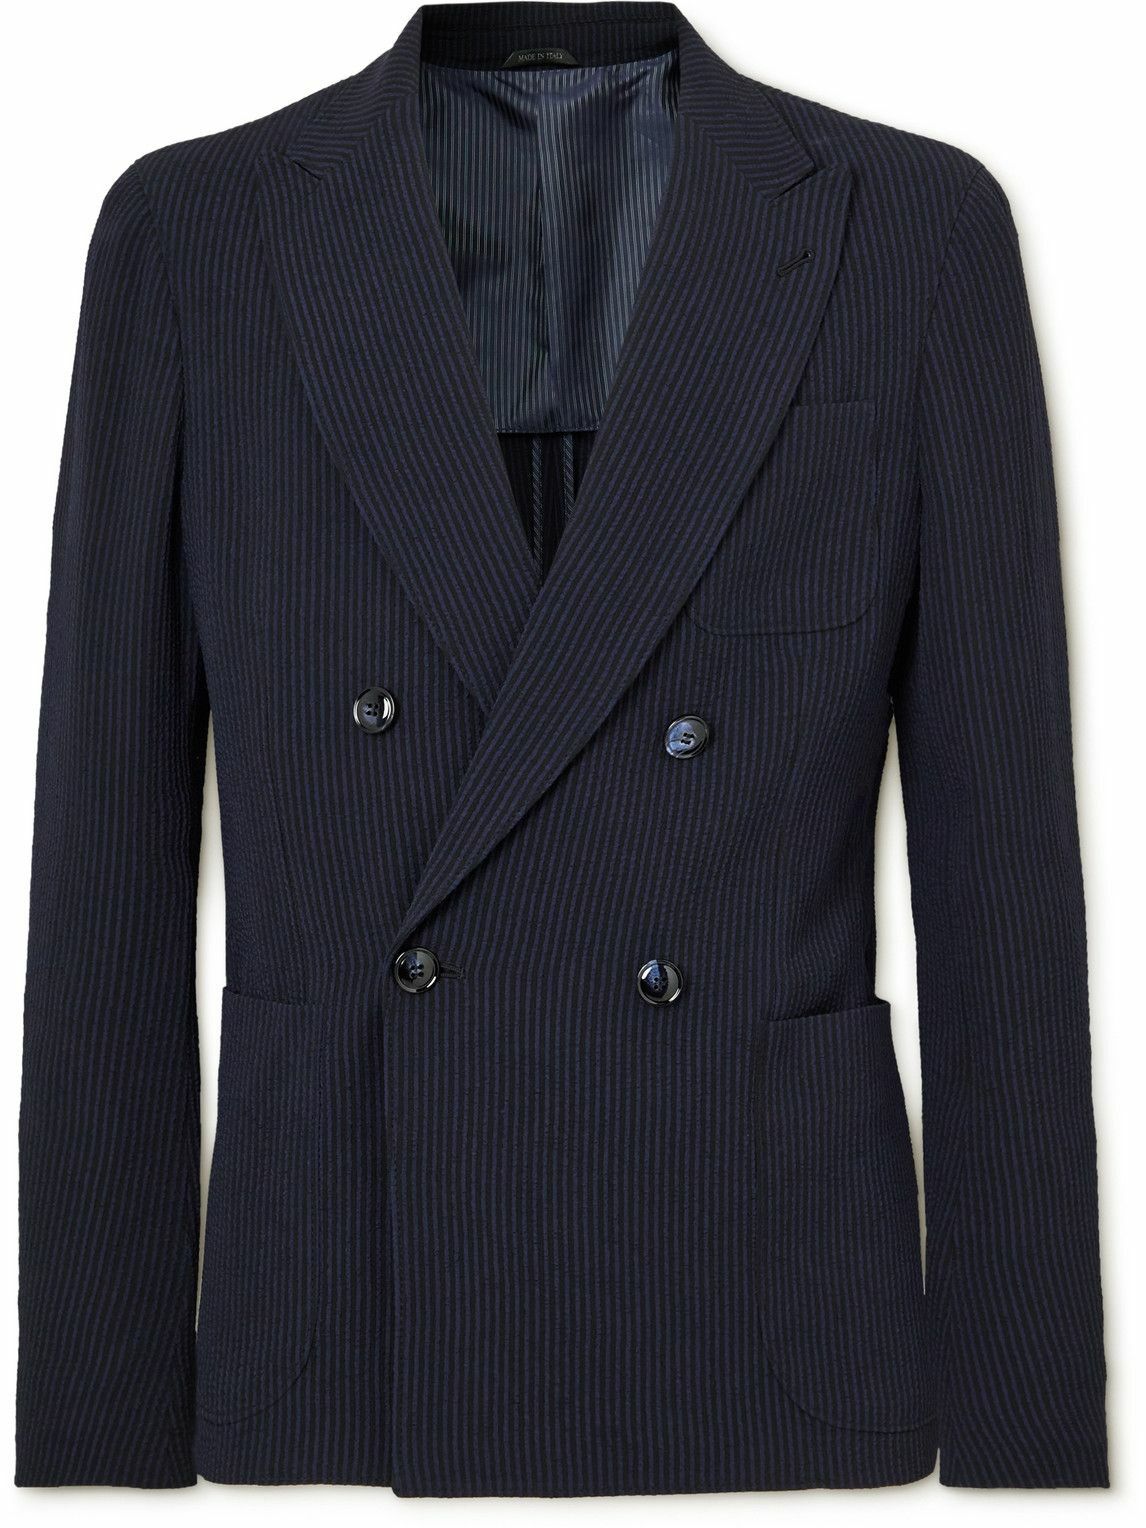 Giorgio Armani - Double-Breasted Striped Seersucker Suit Jacket - Black ...